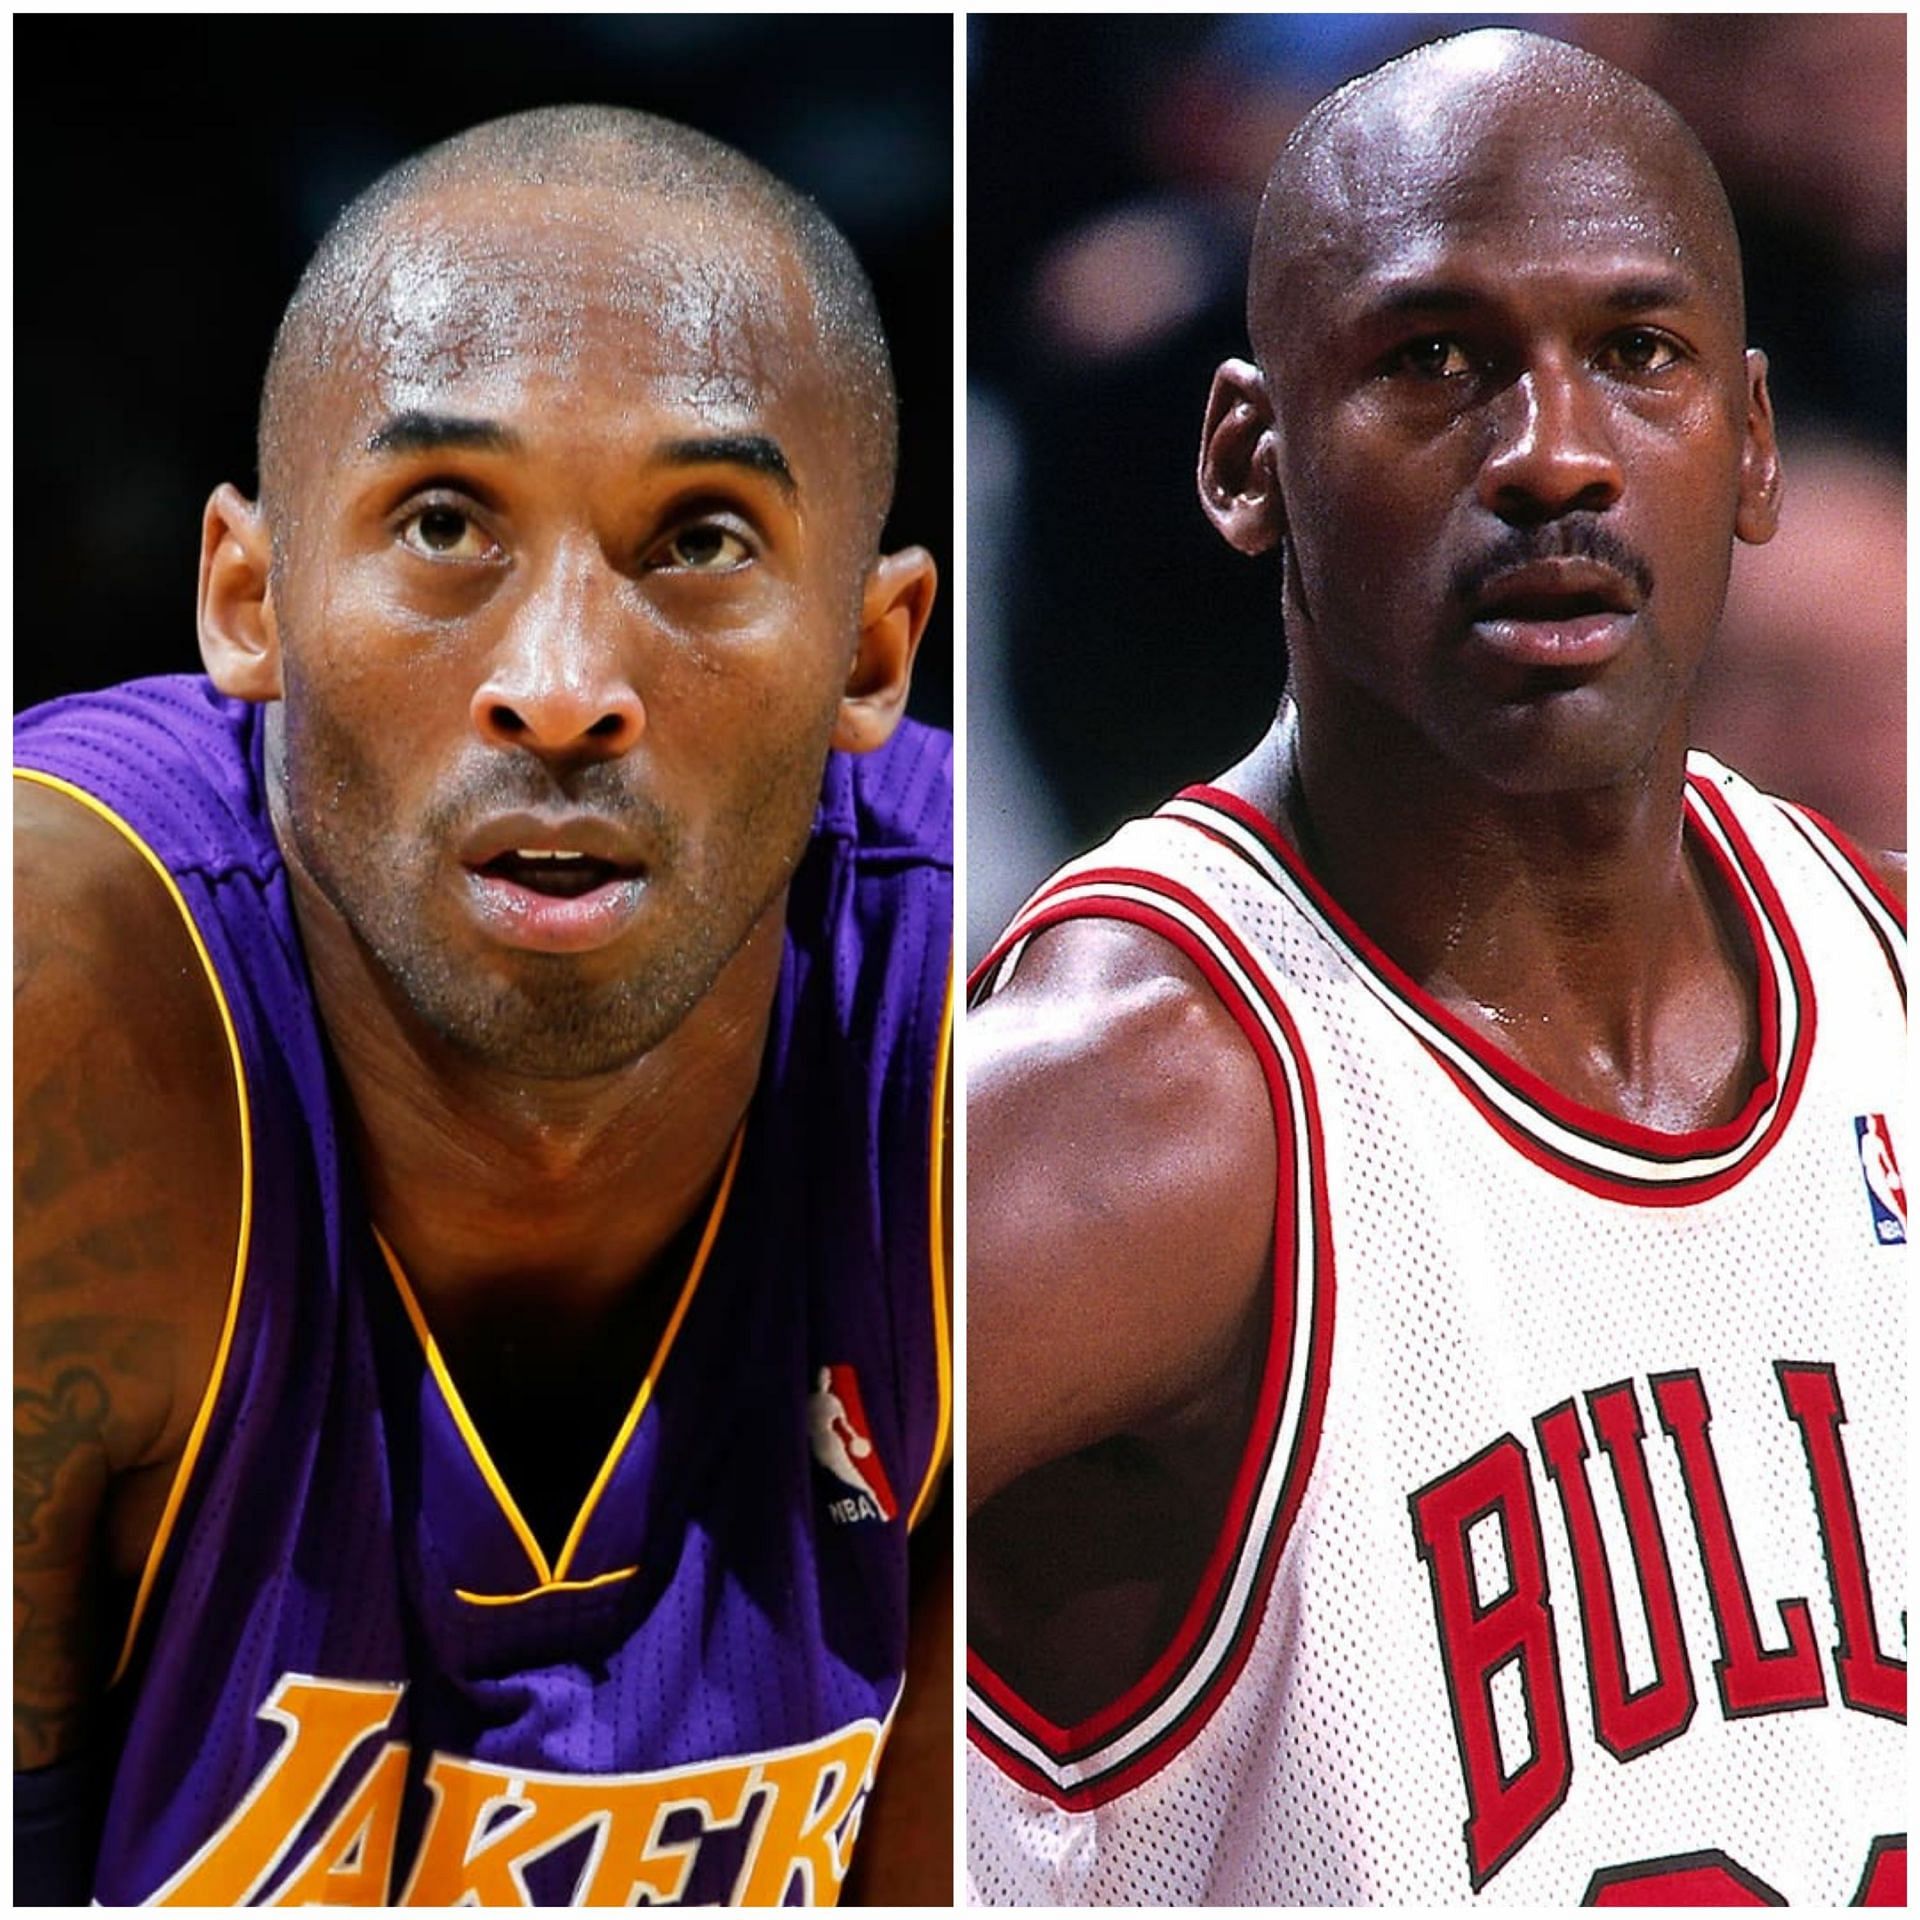 Who shot better between Michael Jordan and Kobe Bryant? Doing a ...